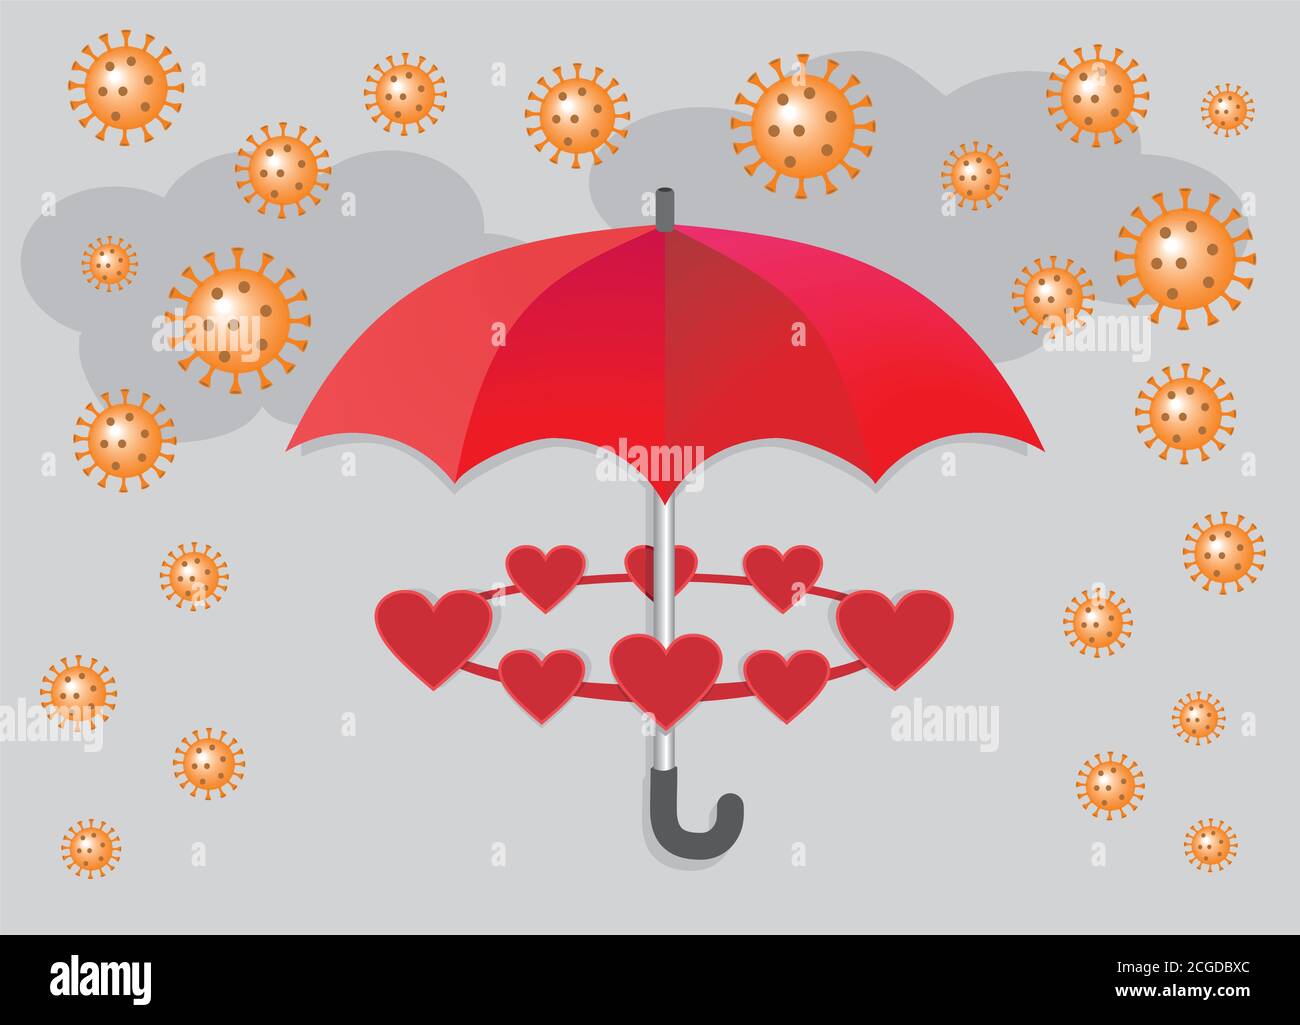 Umbrella protects hearts for Corona crisis. Vector illustration. Stock Vector